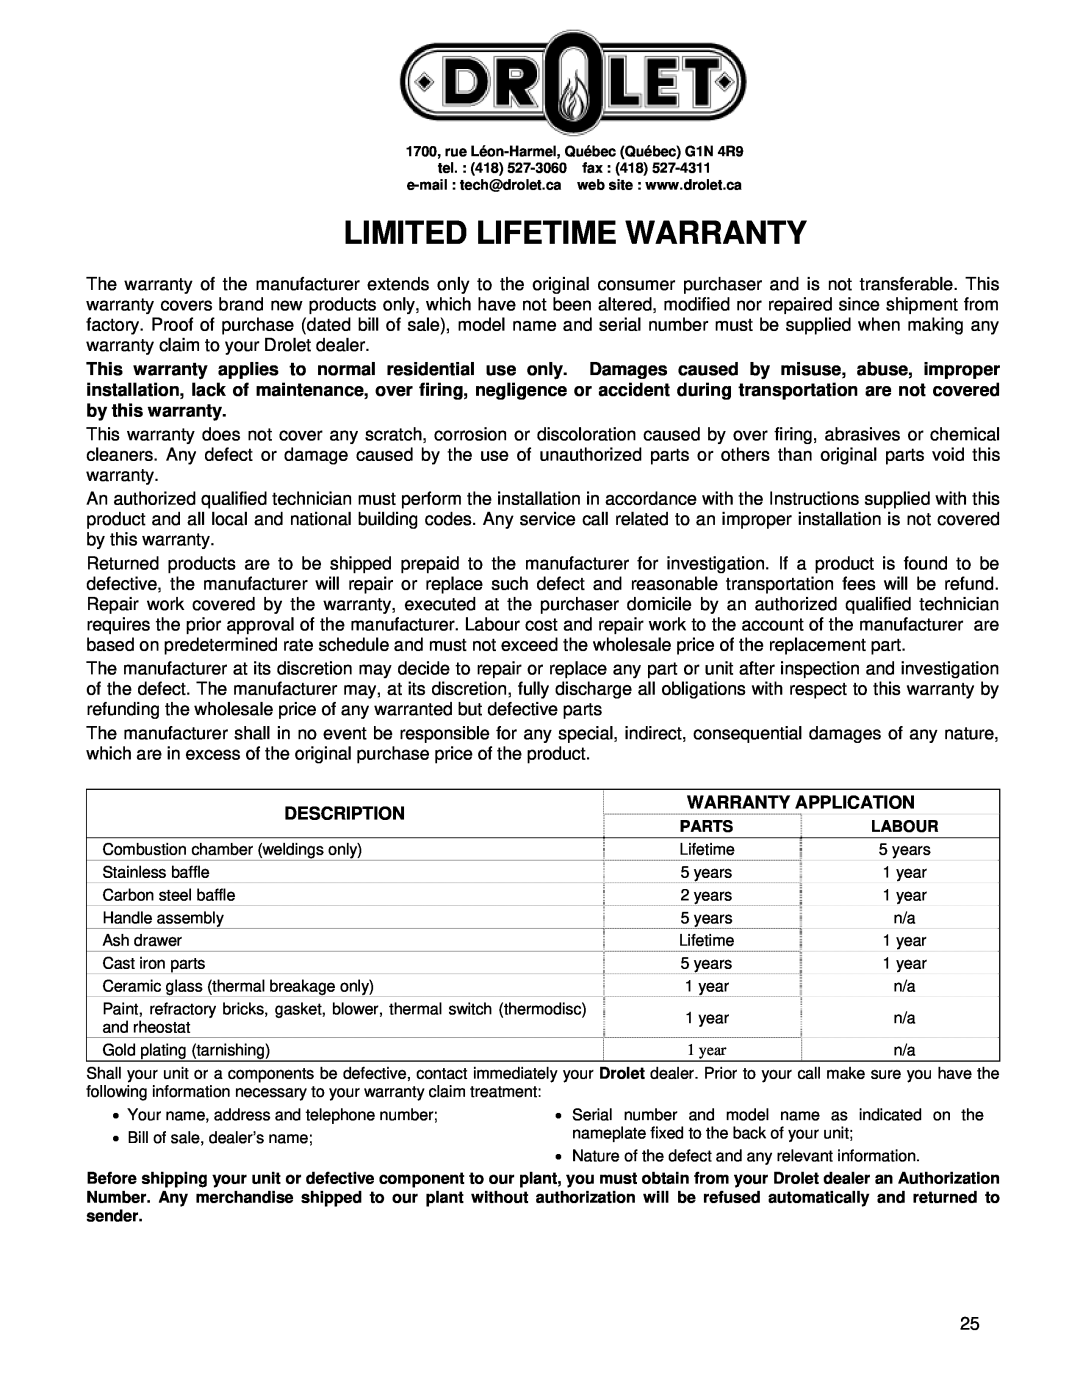 Drolet Jurassien, Savannah, ElDorado, Adirondack, Celtic Limited Lifetime Warranty, Description, Warranty Application 